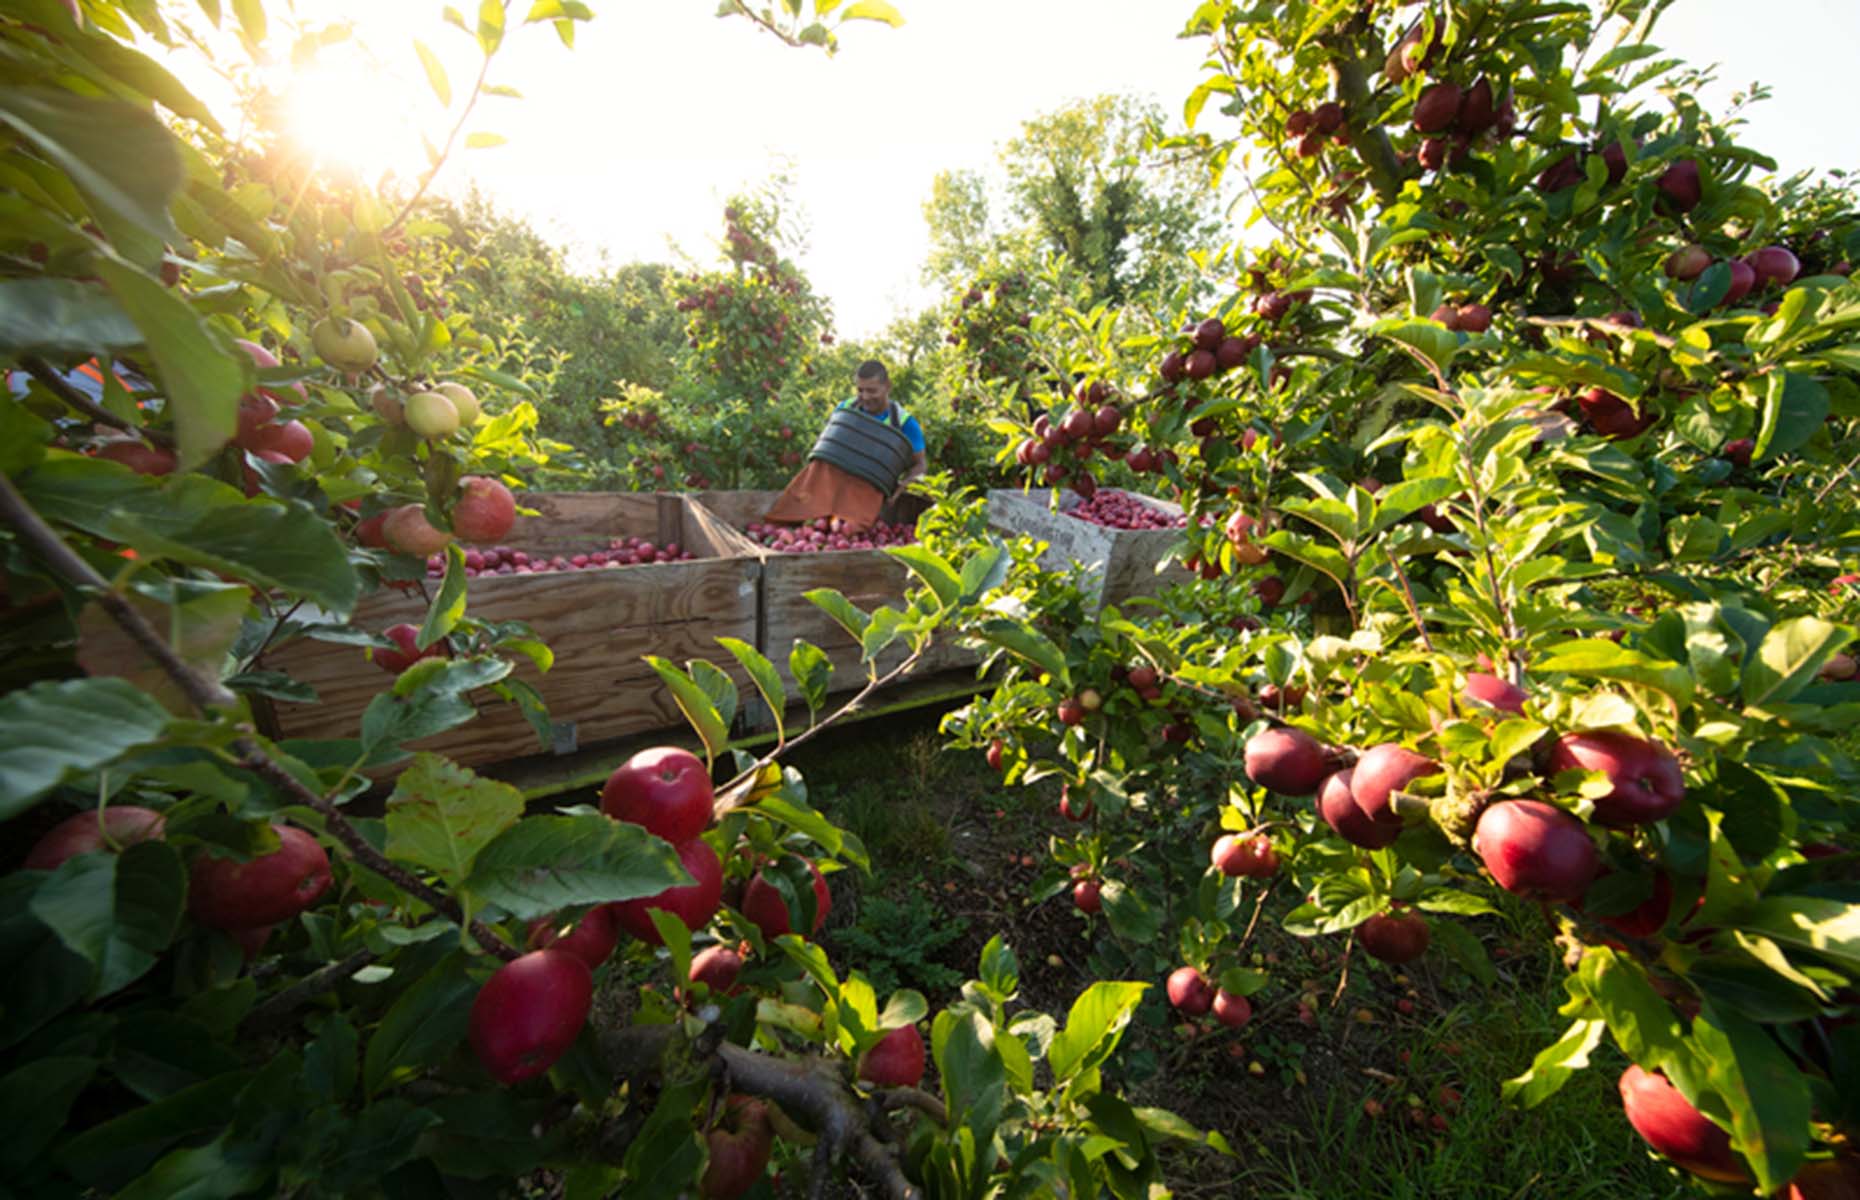 Harvesting apples by hand (Image: British Apples & Pears Ltd.)